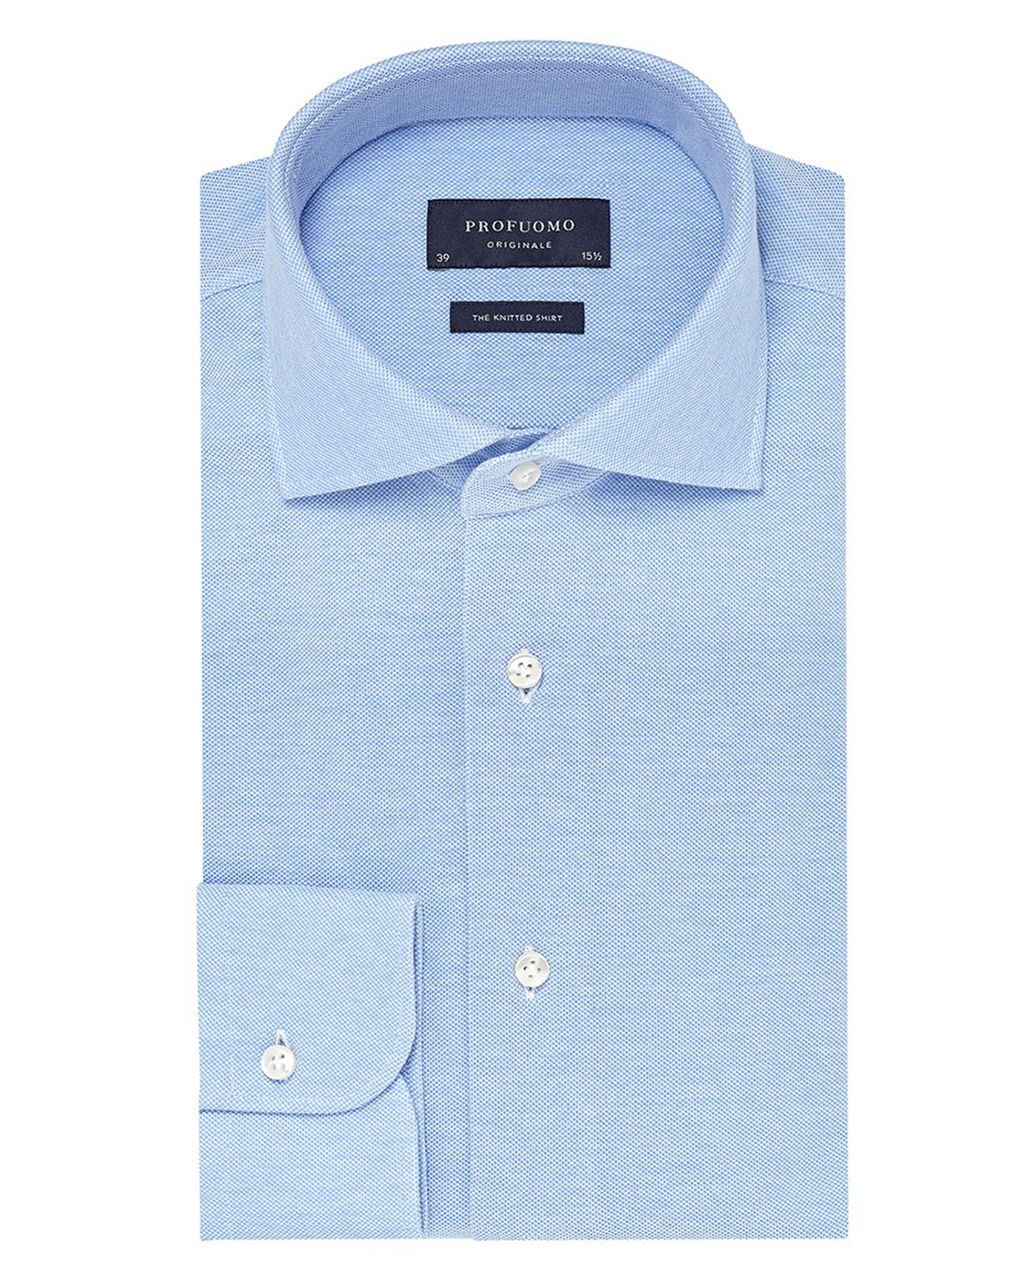 Profuomo Originale Slim fit Knitted Overhemd LM Blauw 031998-32-37